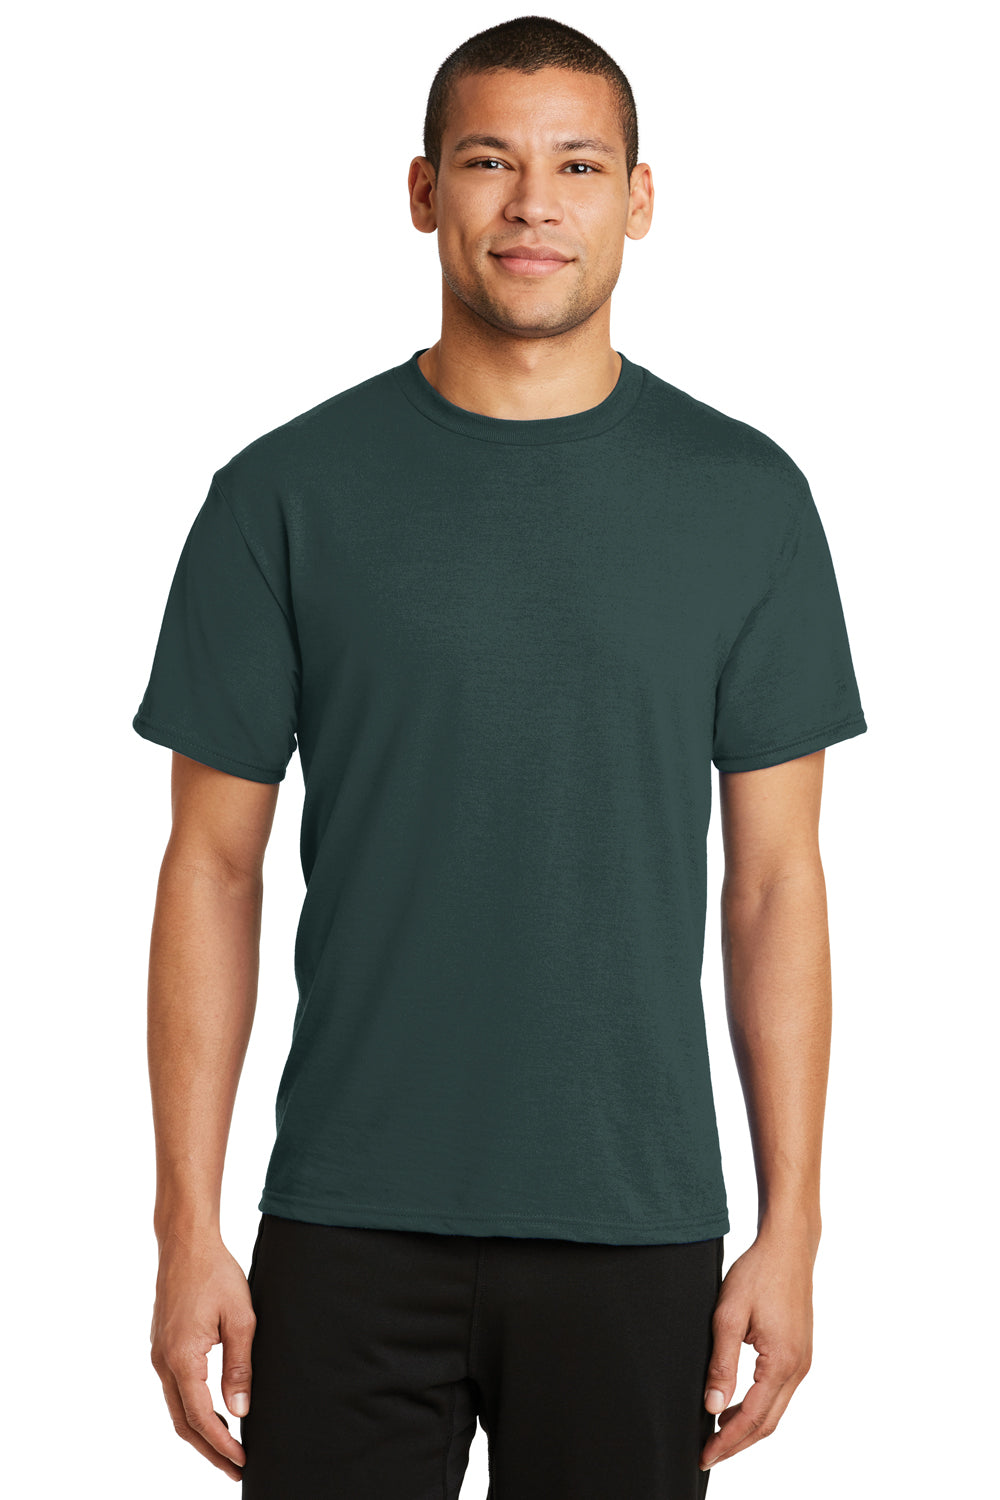 Port & Company PC381 Mens Dry Zone Performance Moisture Wicking Short Sleeve Crewneck T-Shirt Dark Green Front